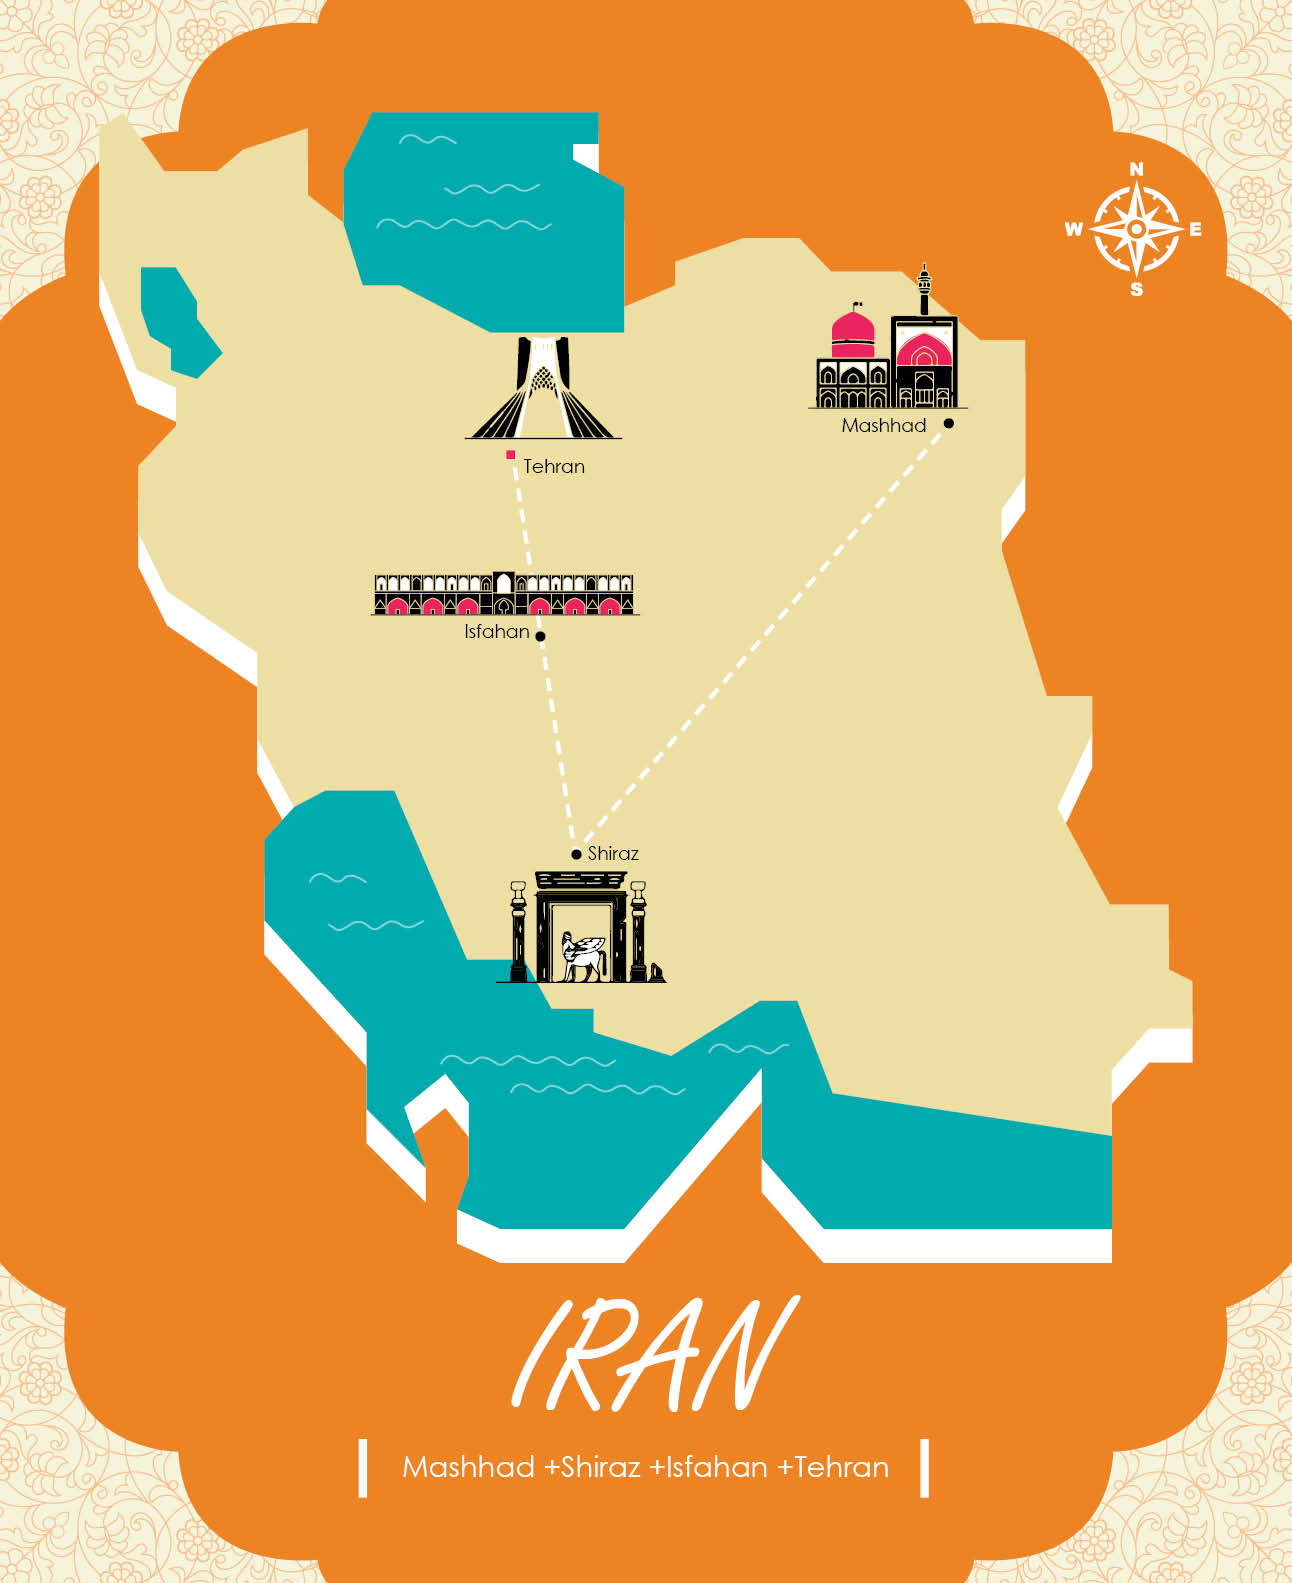 Tour to Iran: Mashhad, Shiraz, Isfahan, Tehran